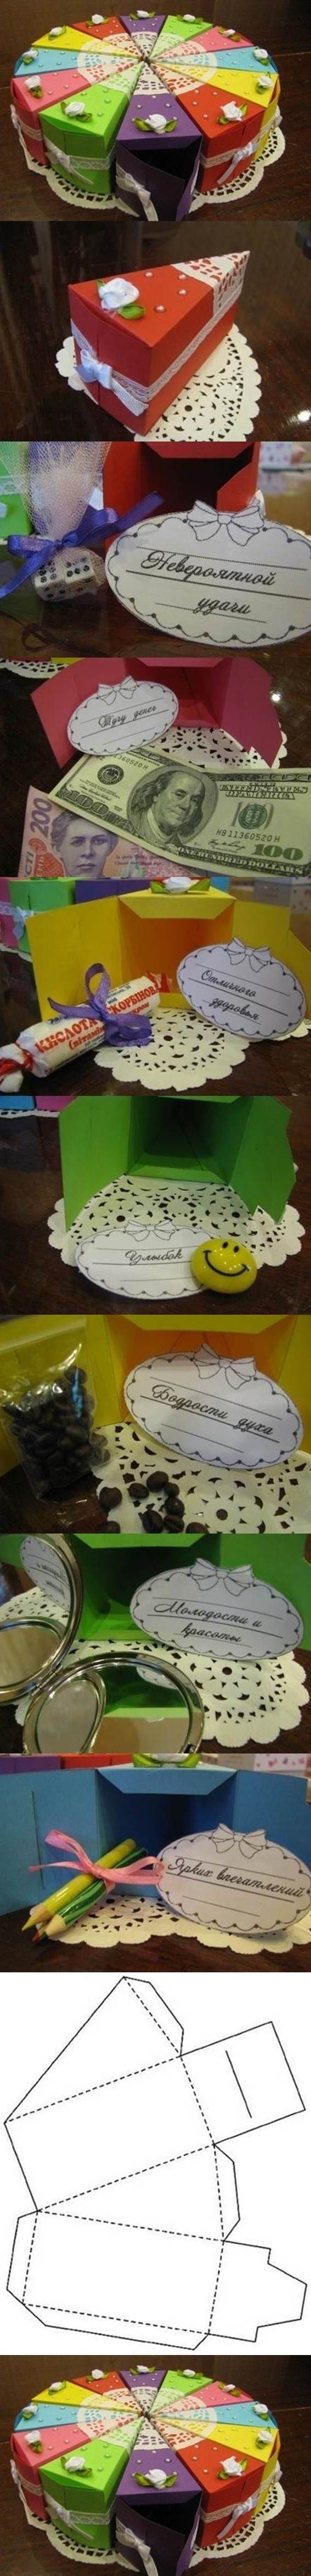 DIY Cake Shaped Gift Boxes | iCreativeIdeas.com Follow Us on Facebook — www.facebook.com/…